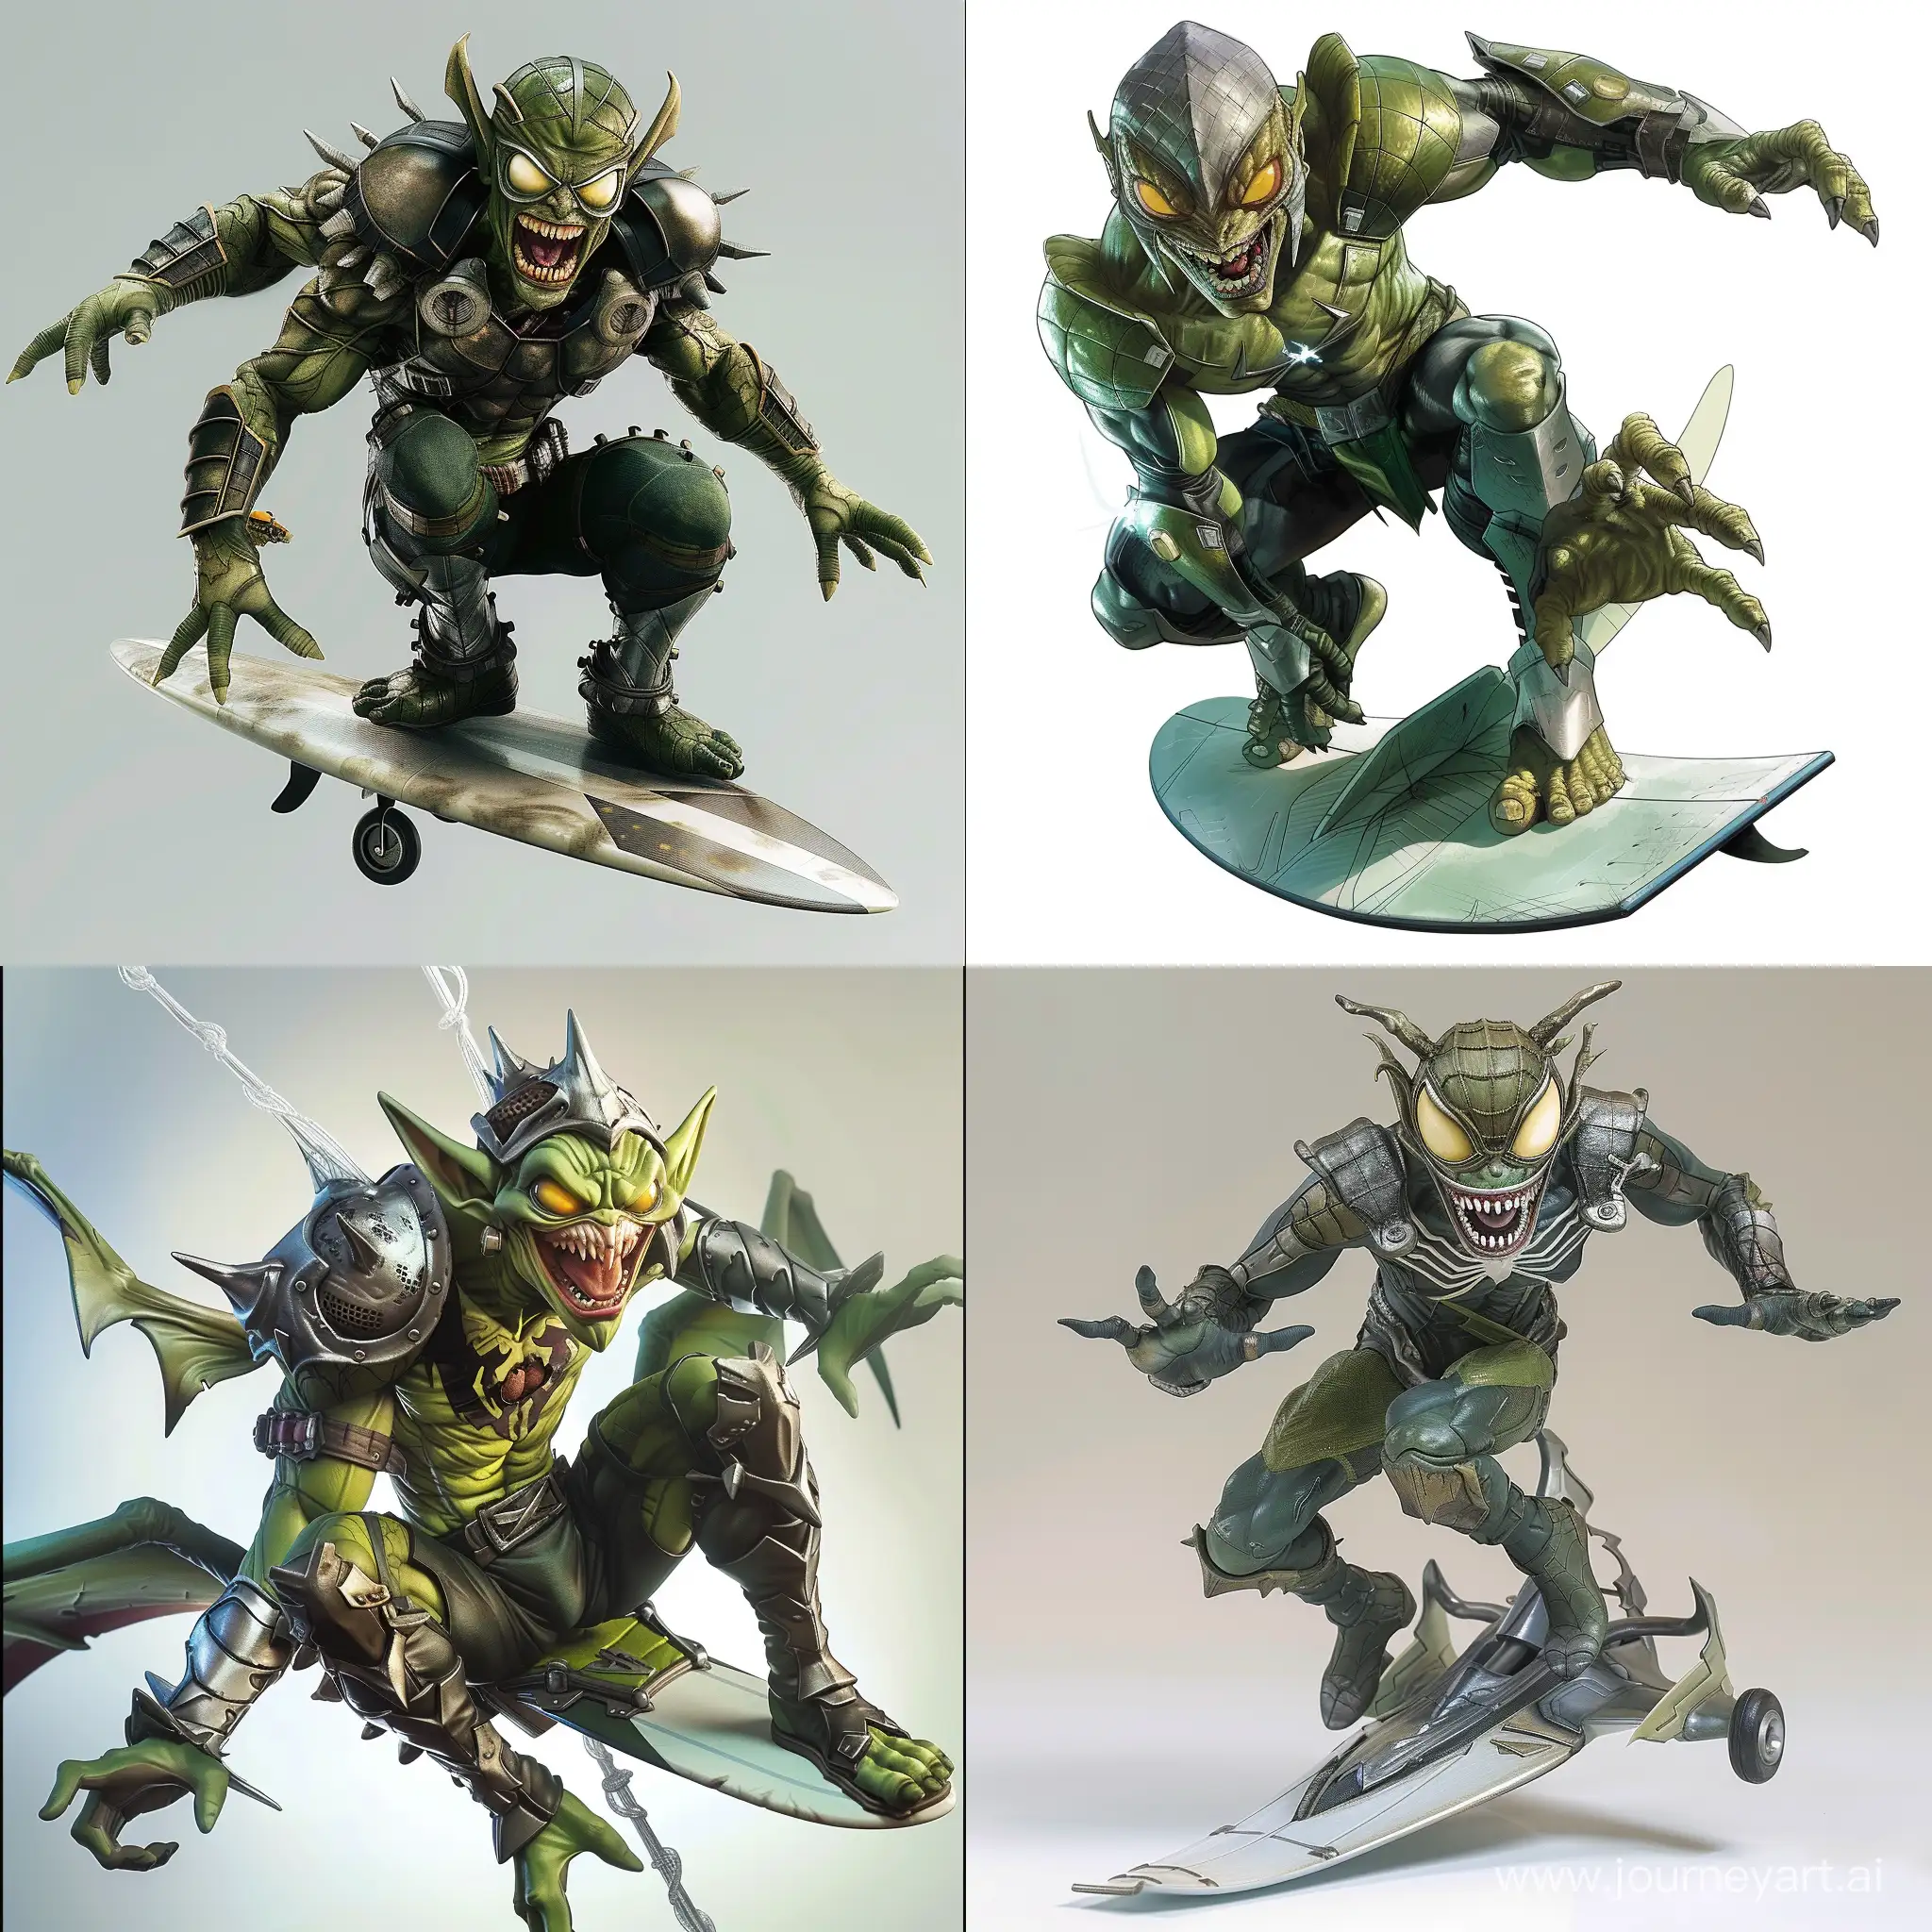 Sinister-Green-Goblin-Riding-Glider-Marvel-Villain-in-Dark-and-Light-Green-Armor